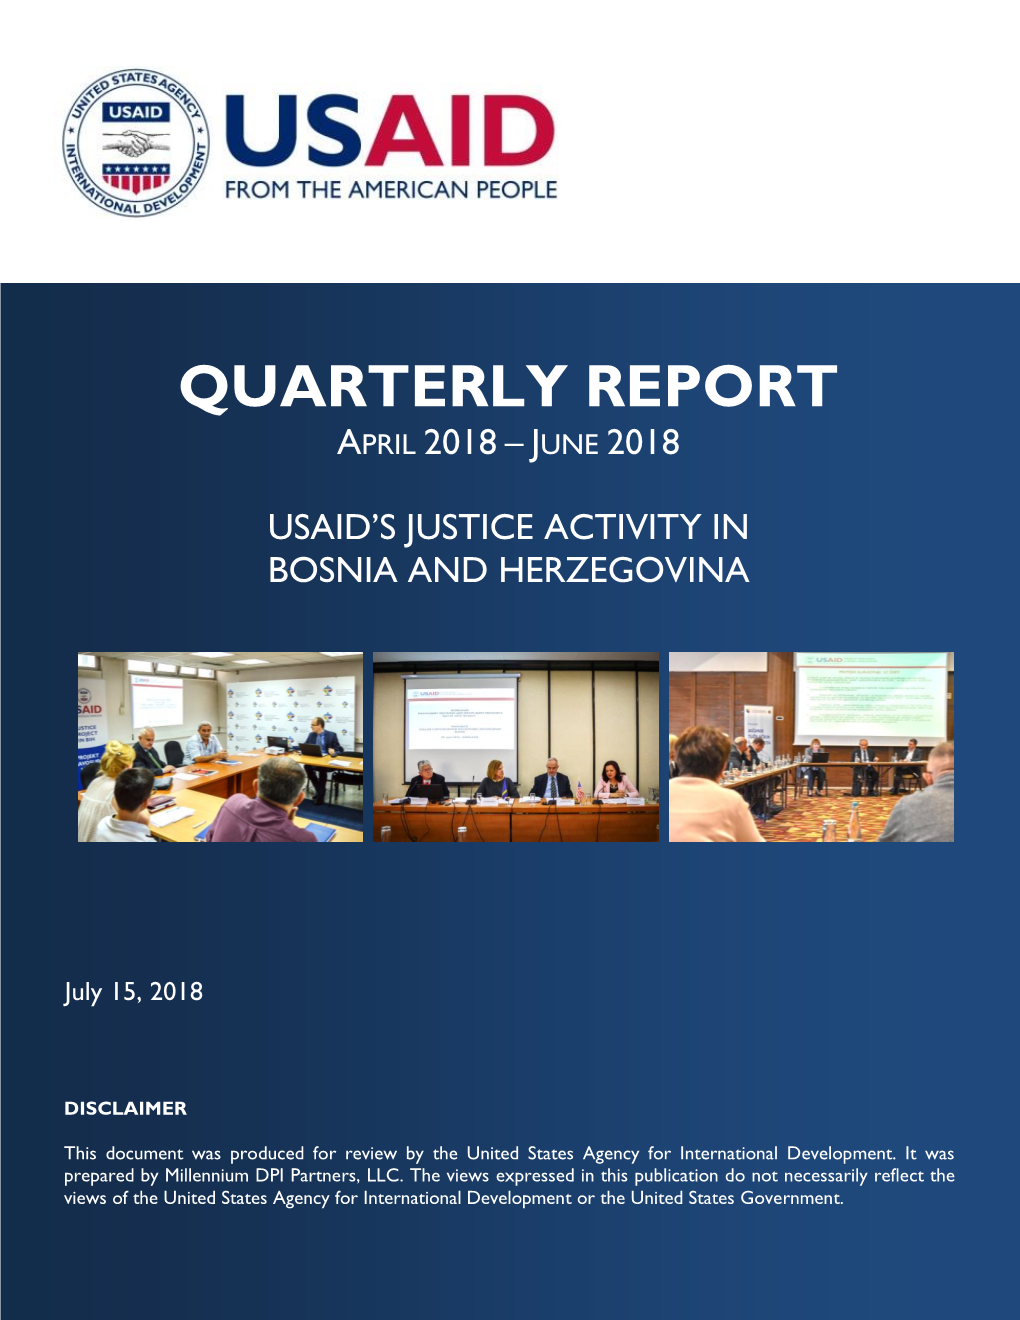 USAID's Justice Activity in Bih, Quarterly Report, April – June 2018